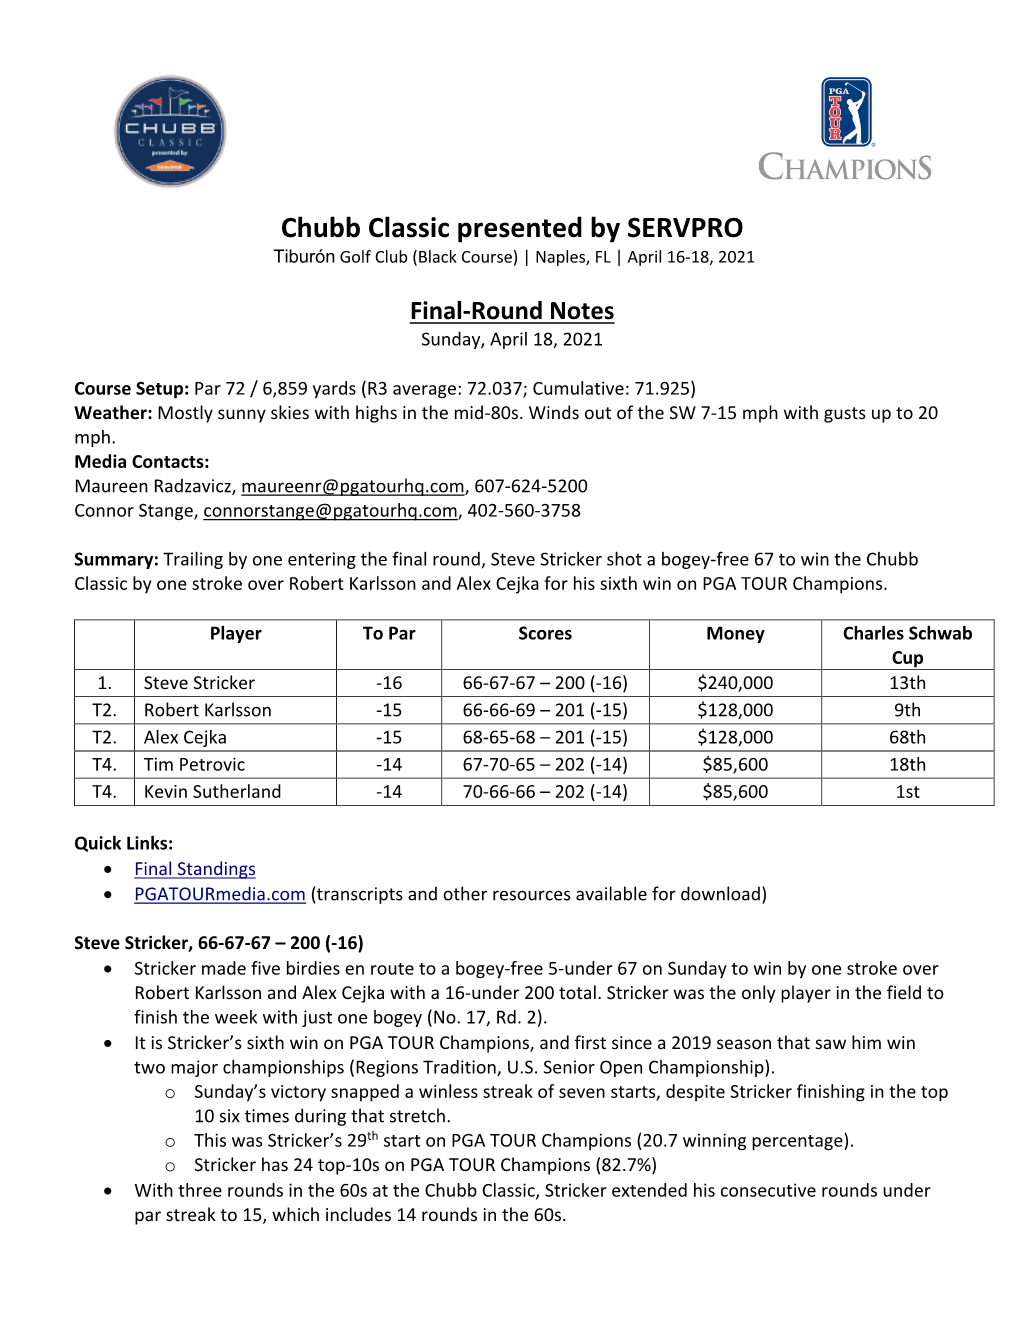 Chubb Classic Presented by SERVPRO Tiburón Golf Club (Black Course) | Naples, FL | April 16-18, 2021